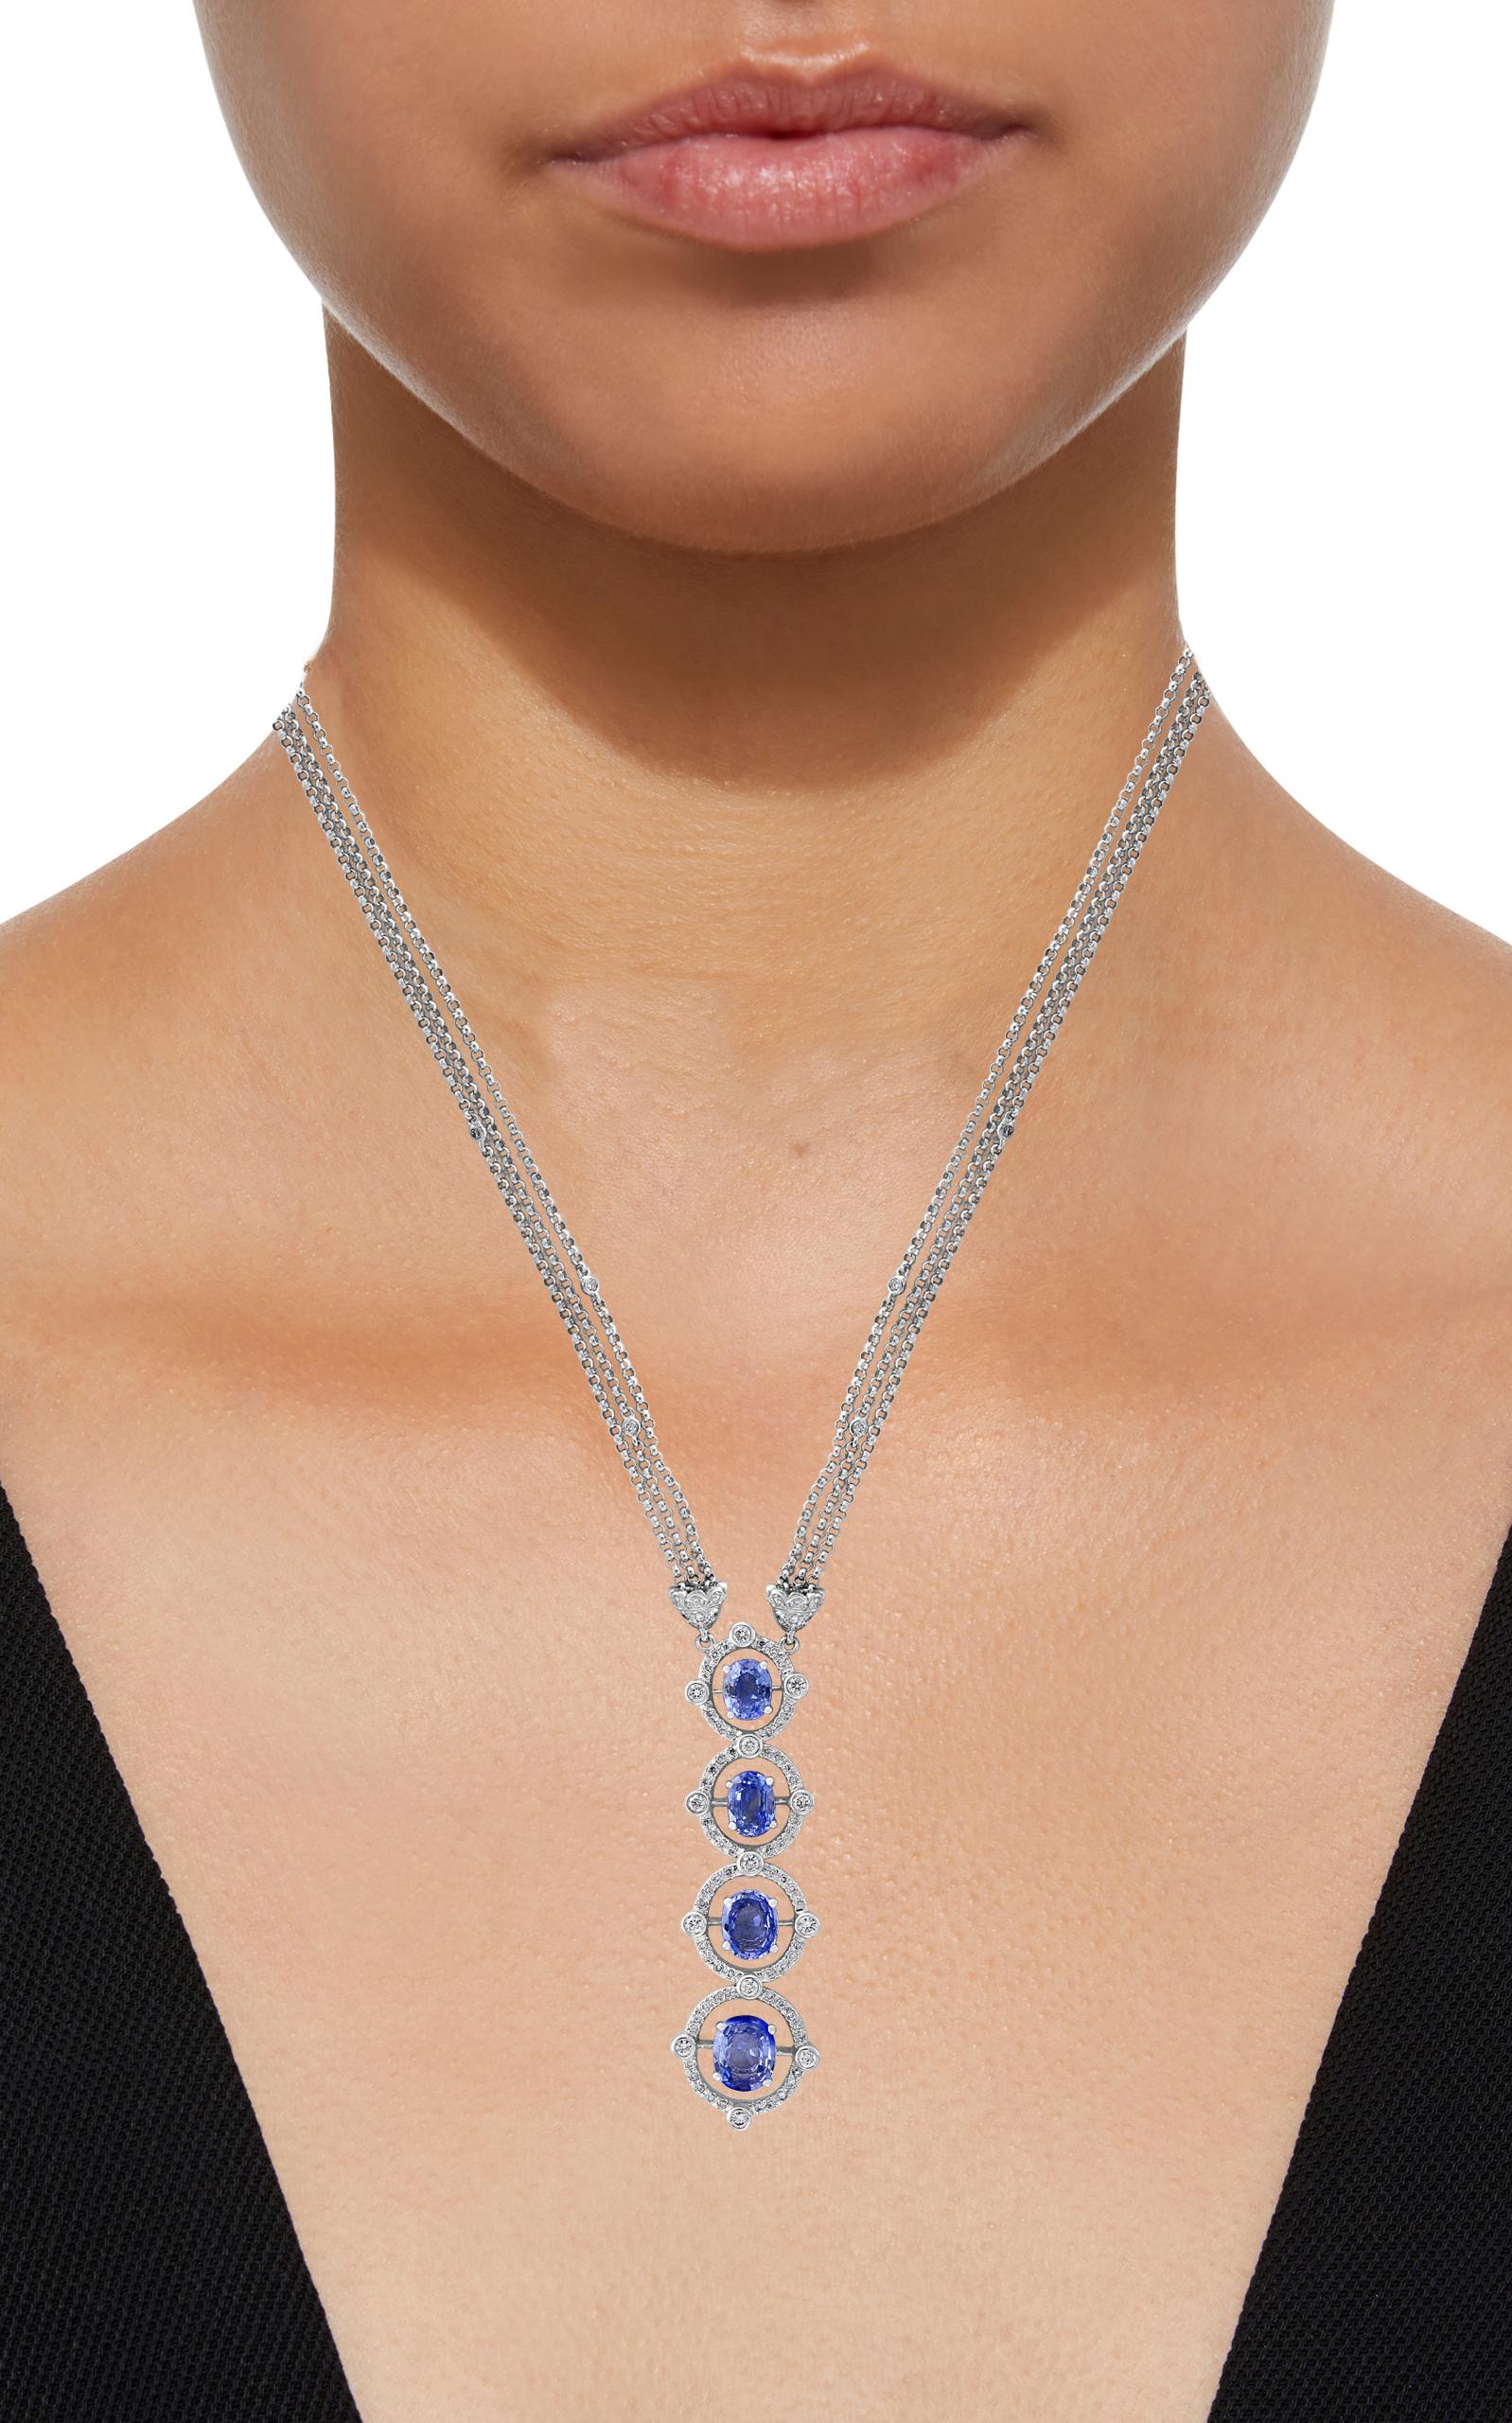 Women's 7 Carat Sapphire and Diamond Pendant or Necklace 18 Karat Gold Multi Chain